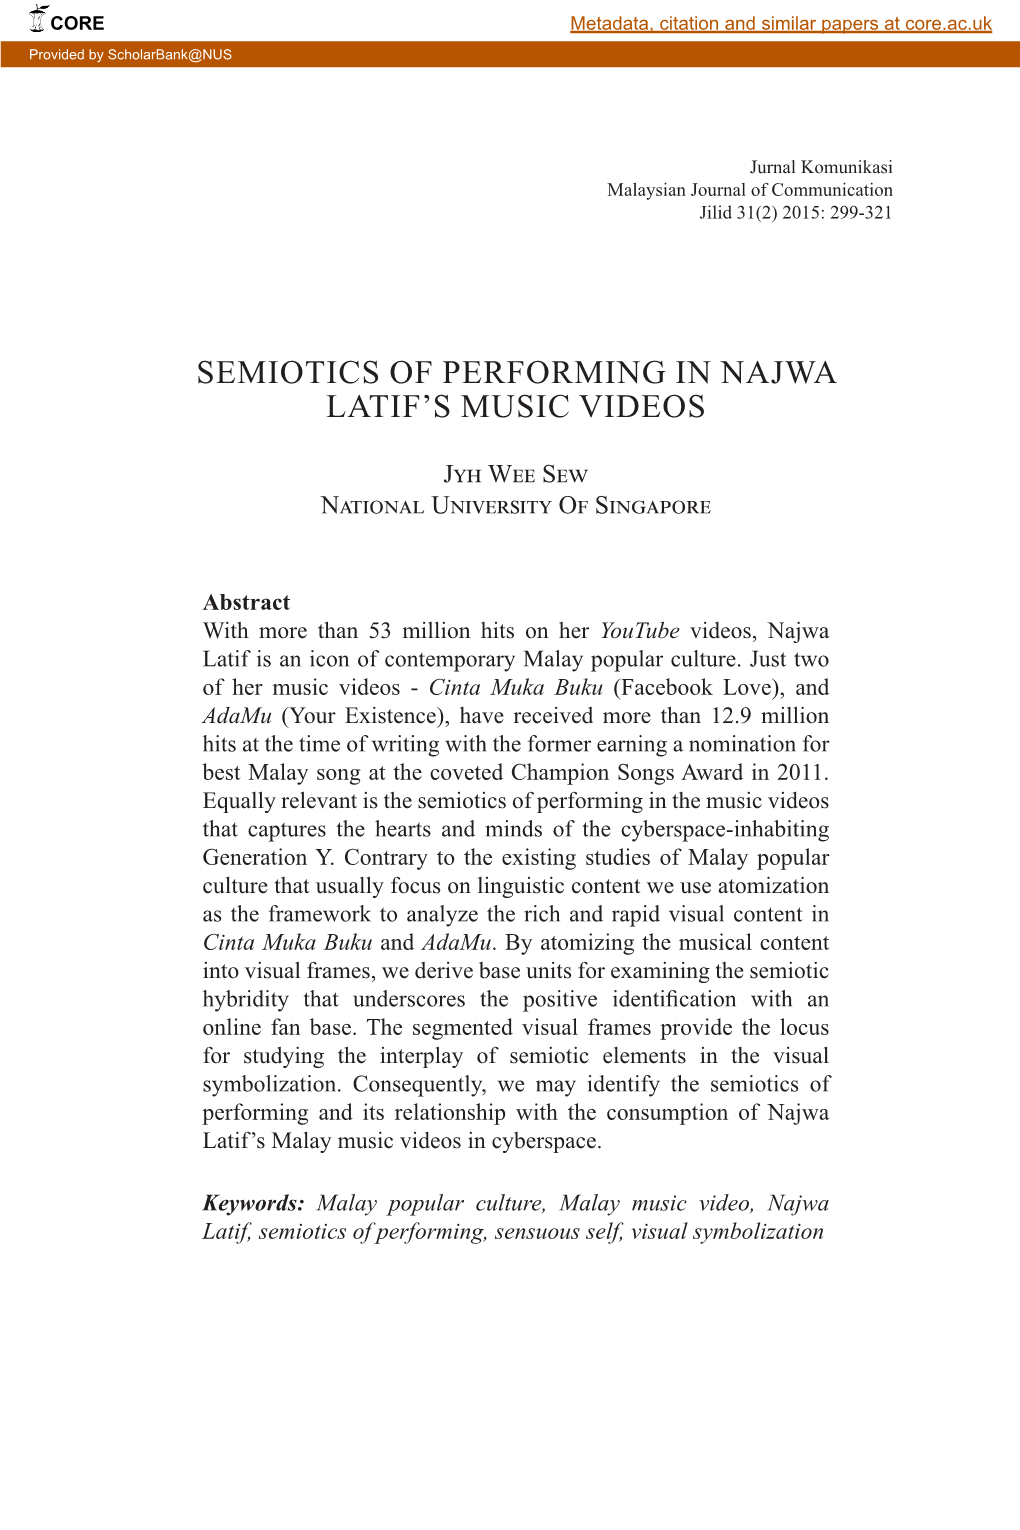 Semiotics of Performing in Najwa Latif's Music